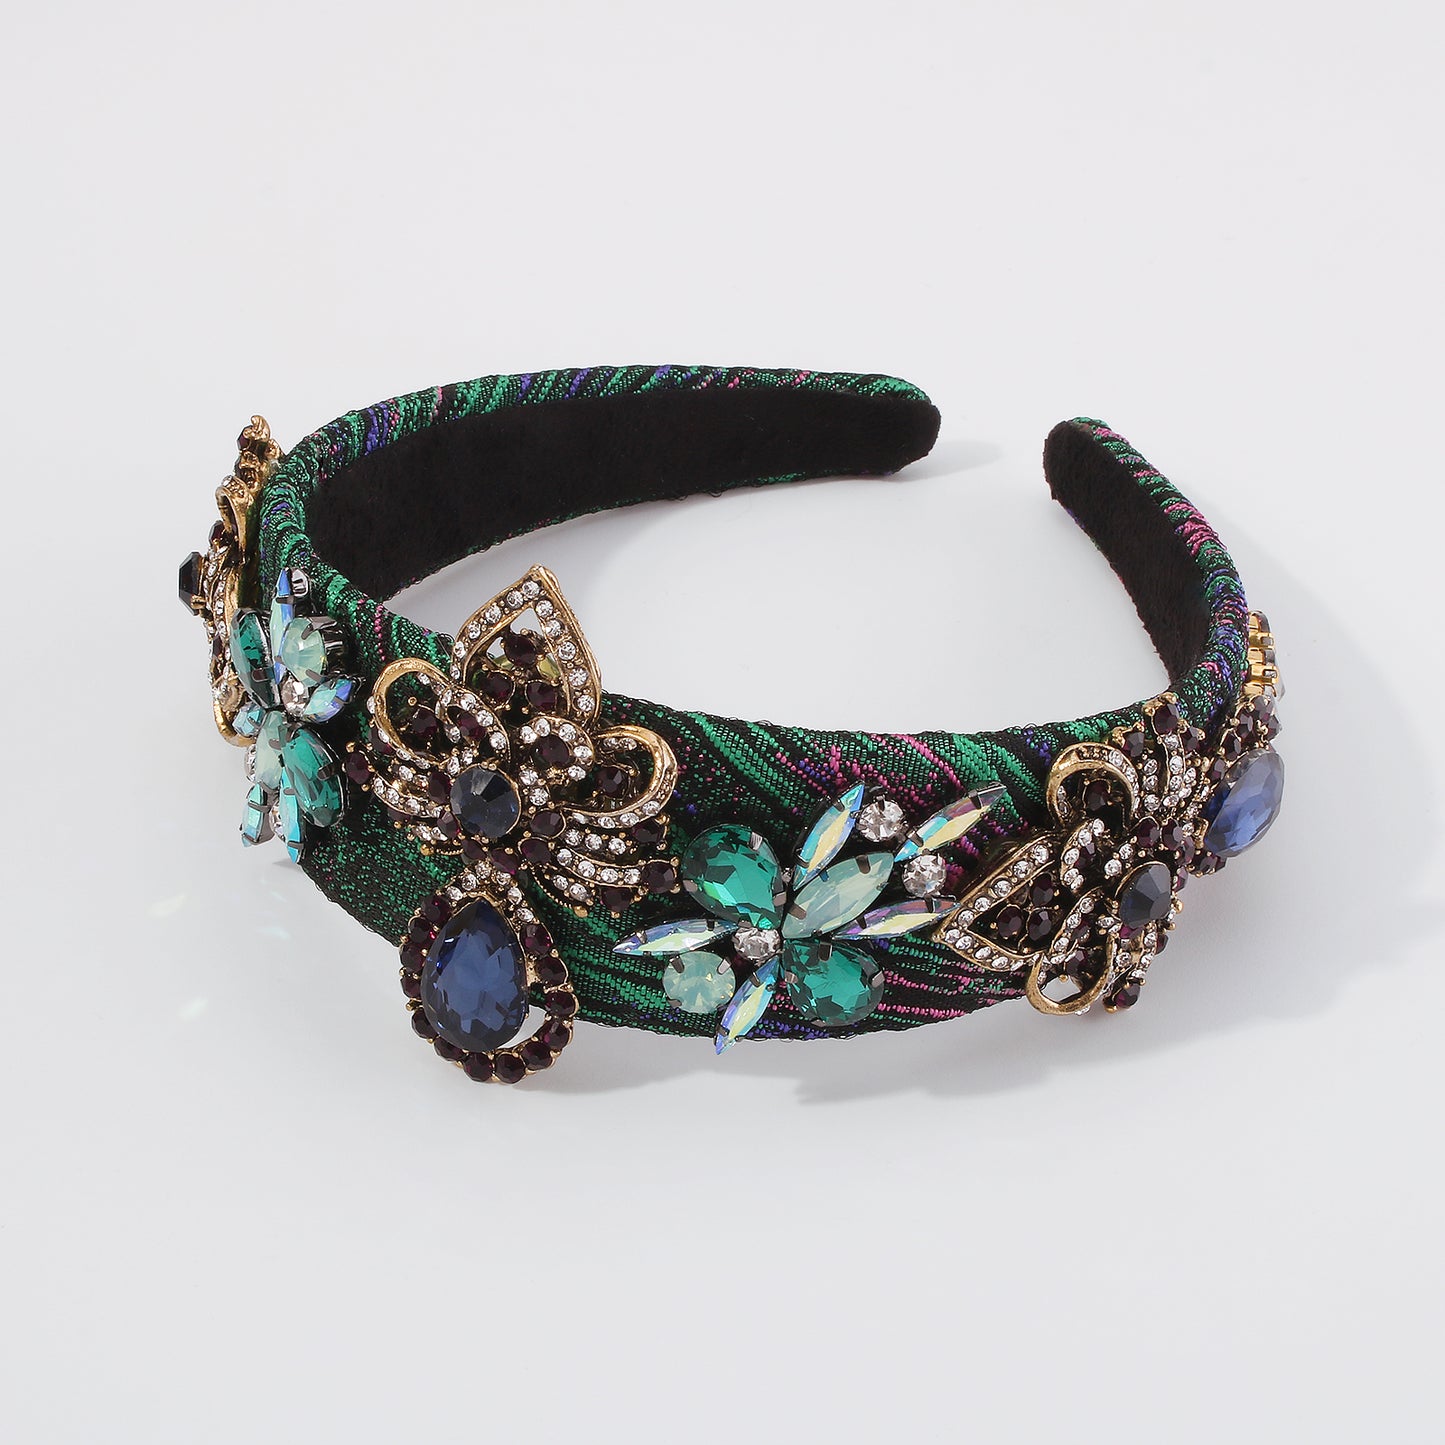 Luxurious Embroidery Flowers Bejeweled Rhinestone Headband medyjewelry